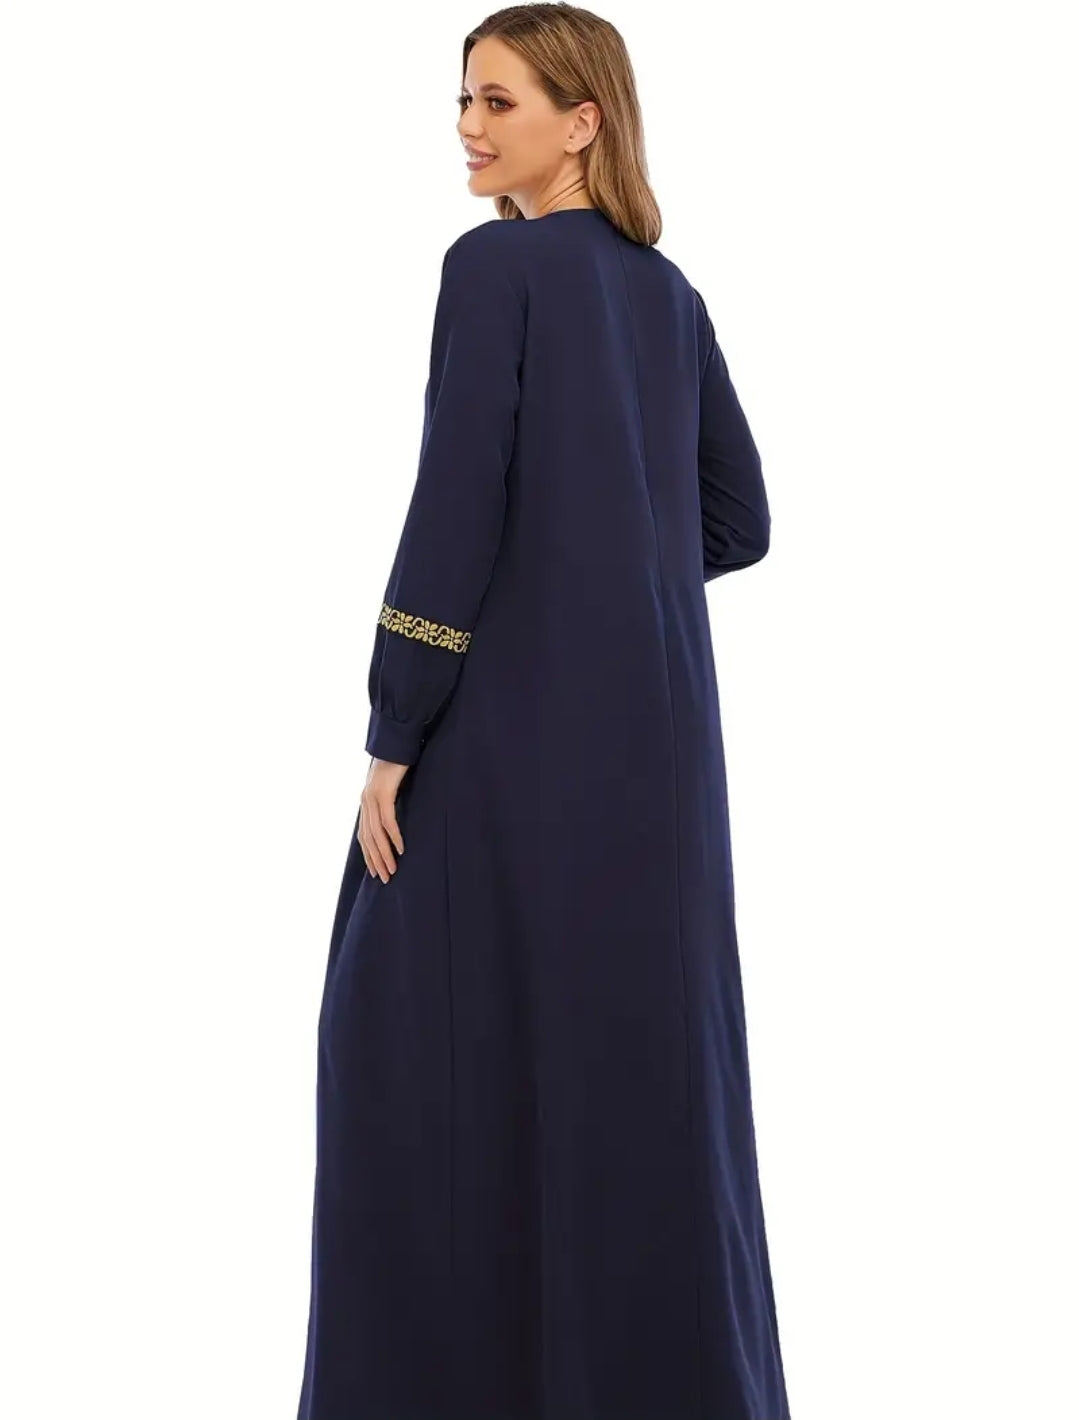 Contrast Trim Kaftan, Elegant Long Sleeve Maxi Length Dress, Women's Clothing